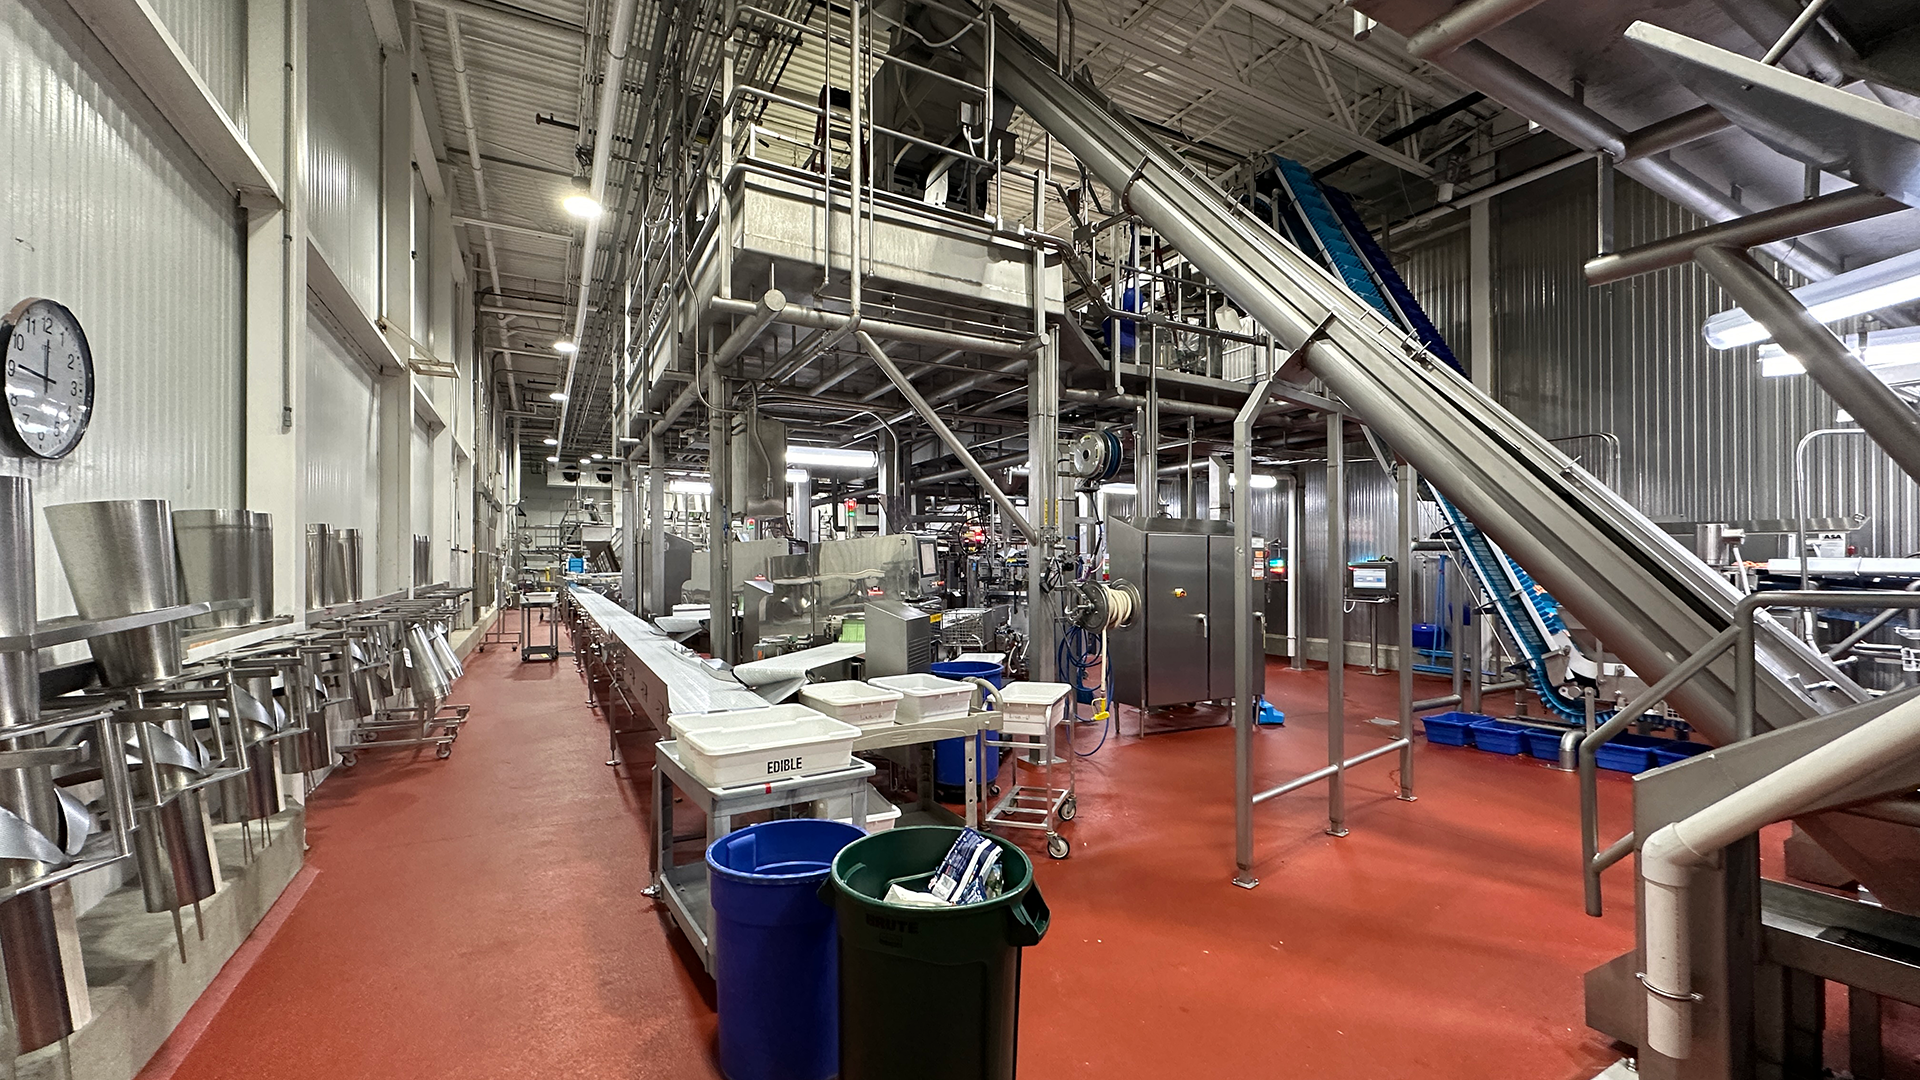 Interior shot of food processing equiptment